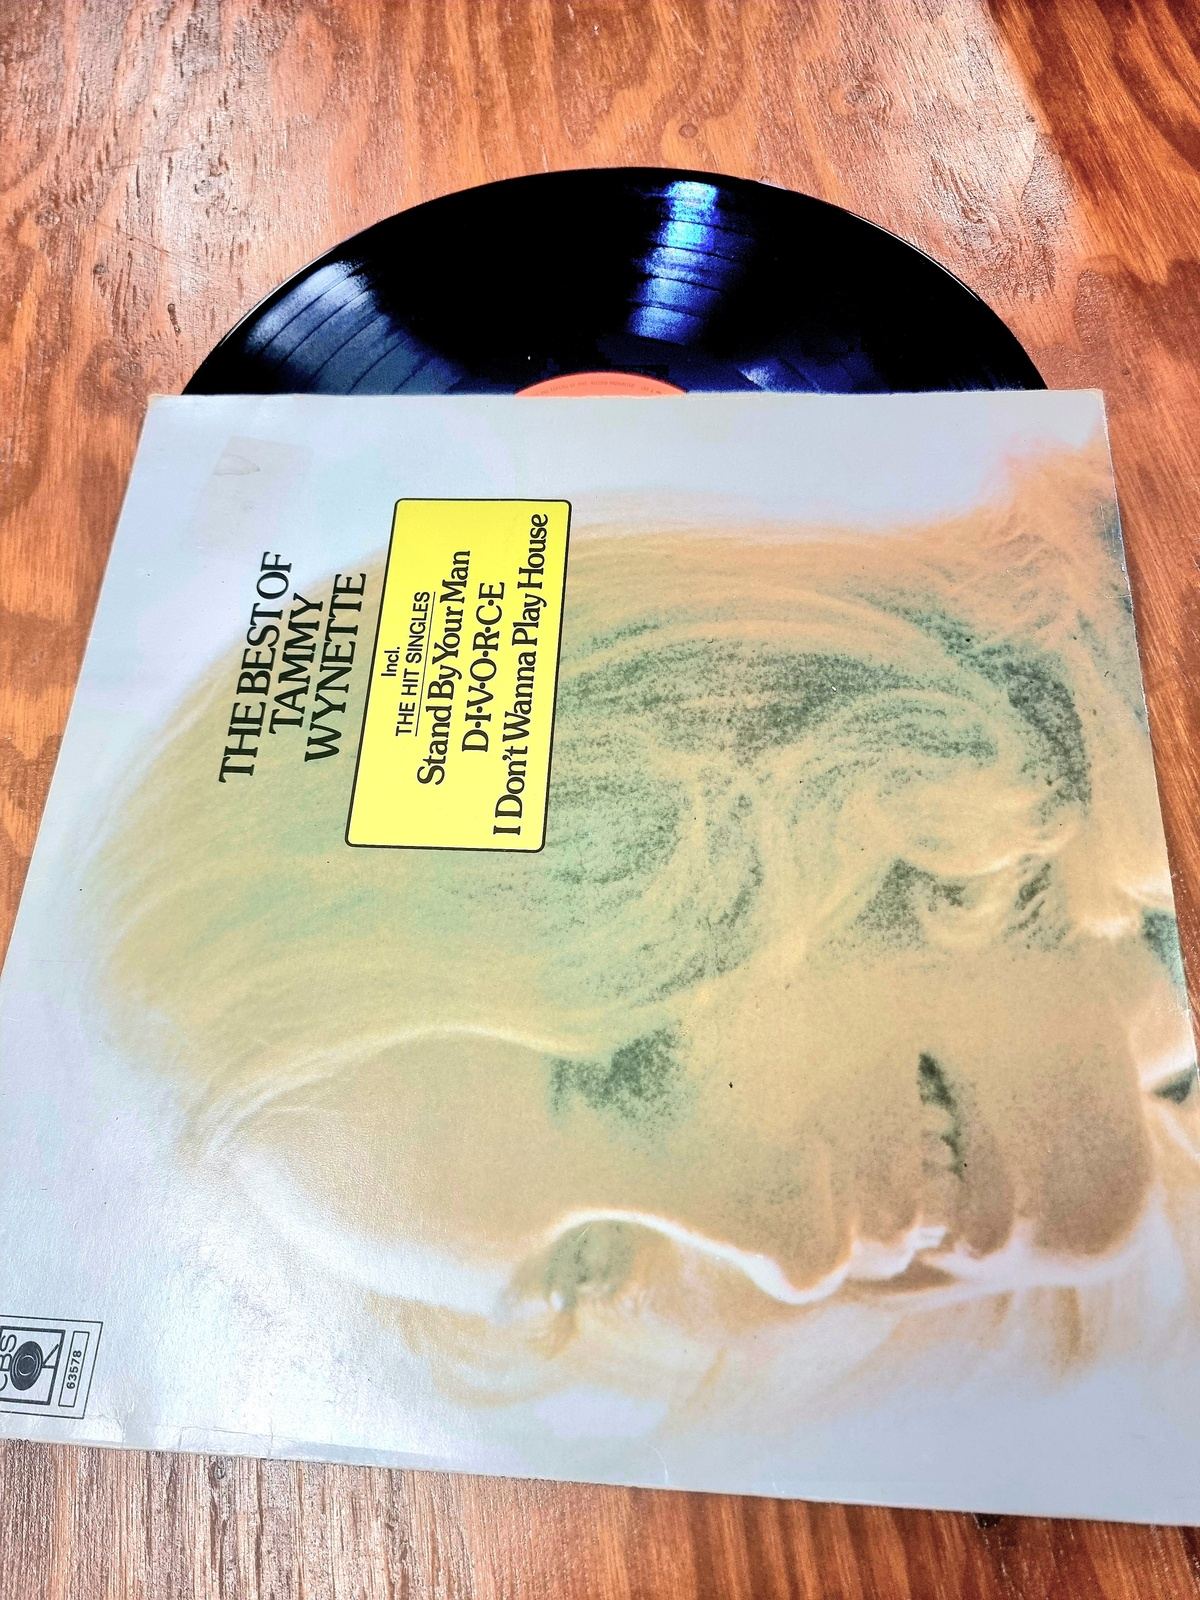 Tammy Wynette – The Best Of Tammy Wynette Vinyl Record